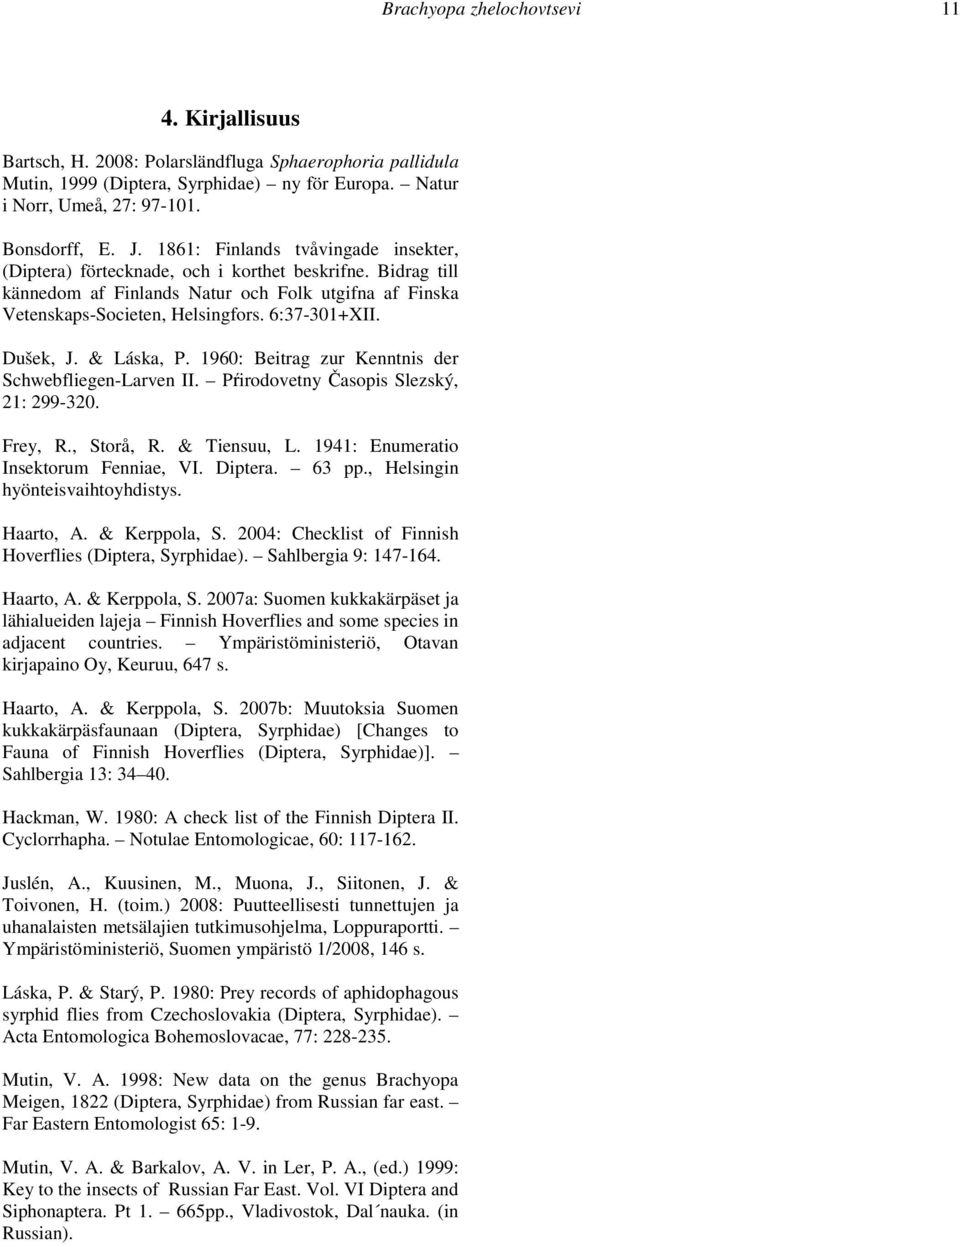 Dušek, J. & Láska, P. 1960: Beitrag zur Kenntnis der Schwebfliegen-Larven II. Pŕirodovetny Časopis Slezský, 21: 299-320. Frey, R., Storå, R. & Tiensuu, L. 1941: Enumeratio Insektorum Fenniae, VI.